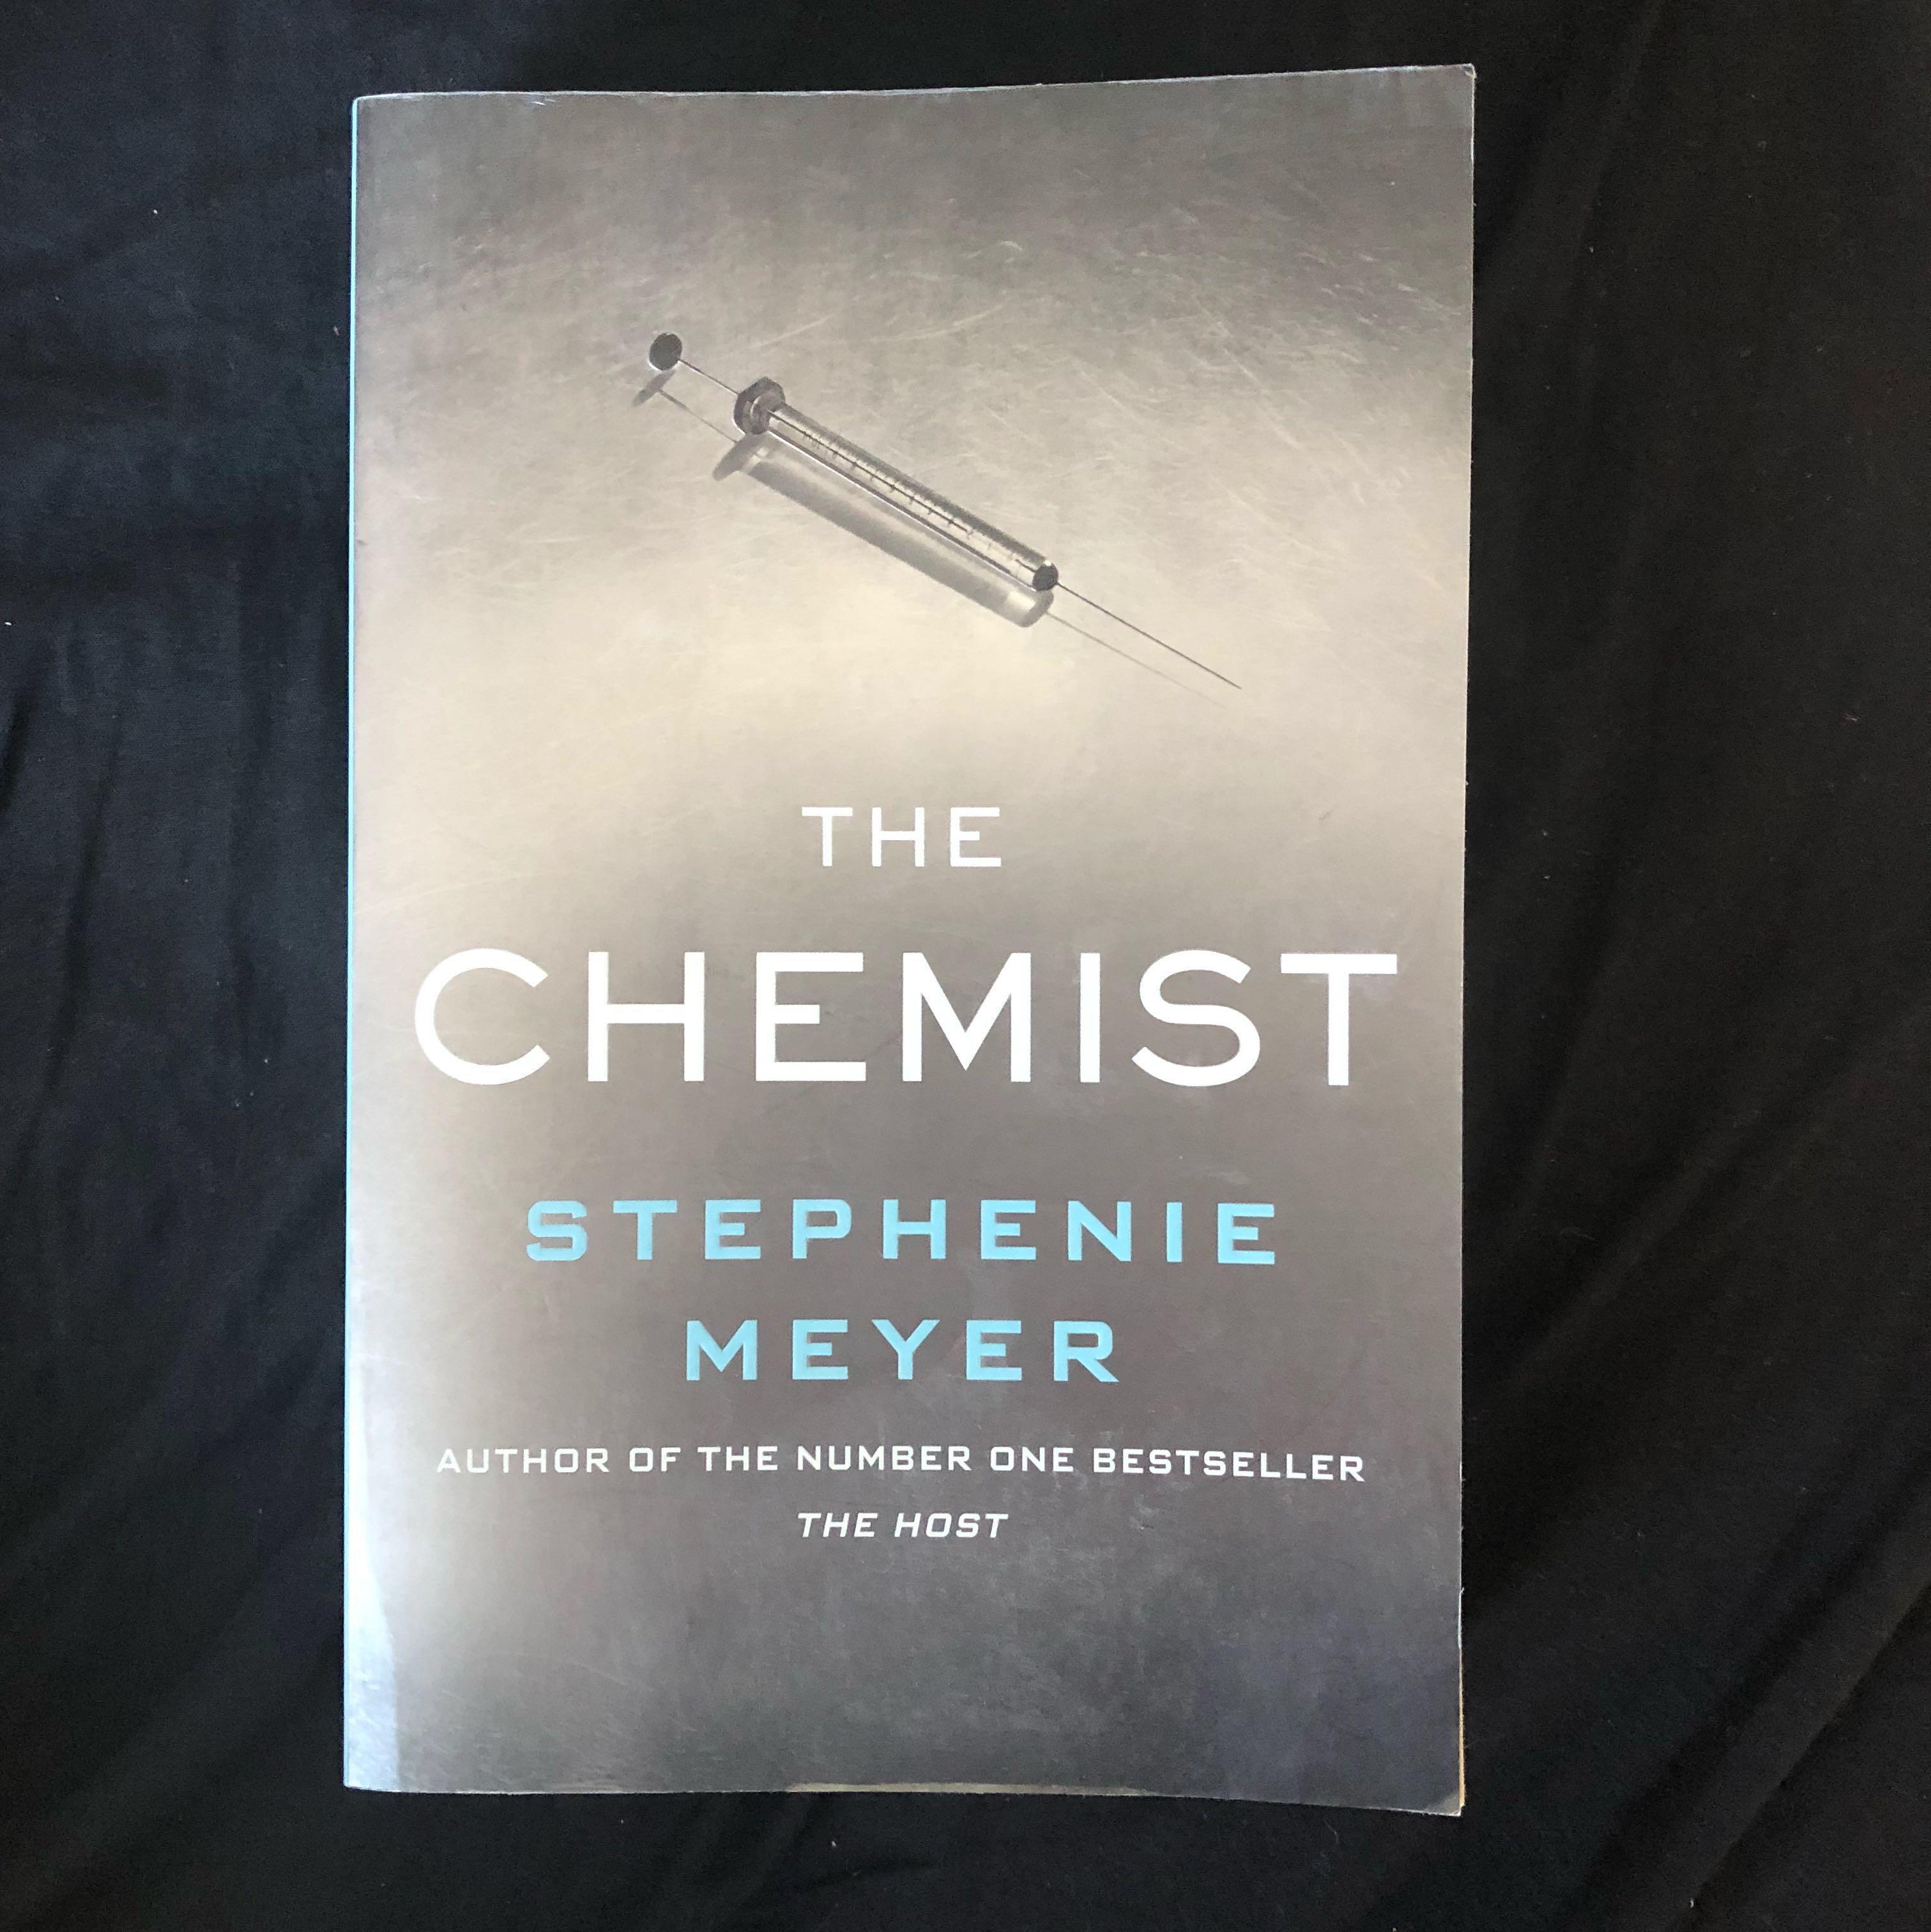 Stephenie Logo - The Chemist (Stephenie Meyer), Books & Stationery, Books on Carousell